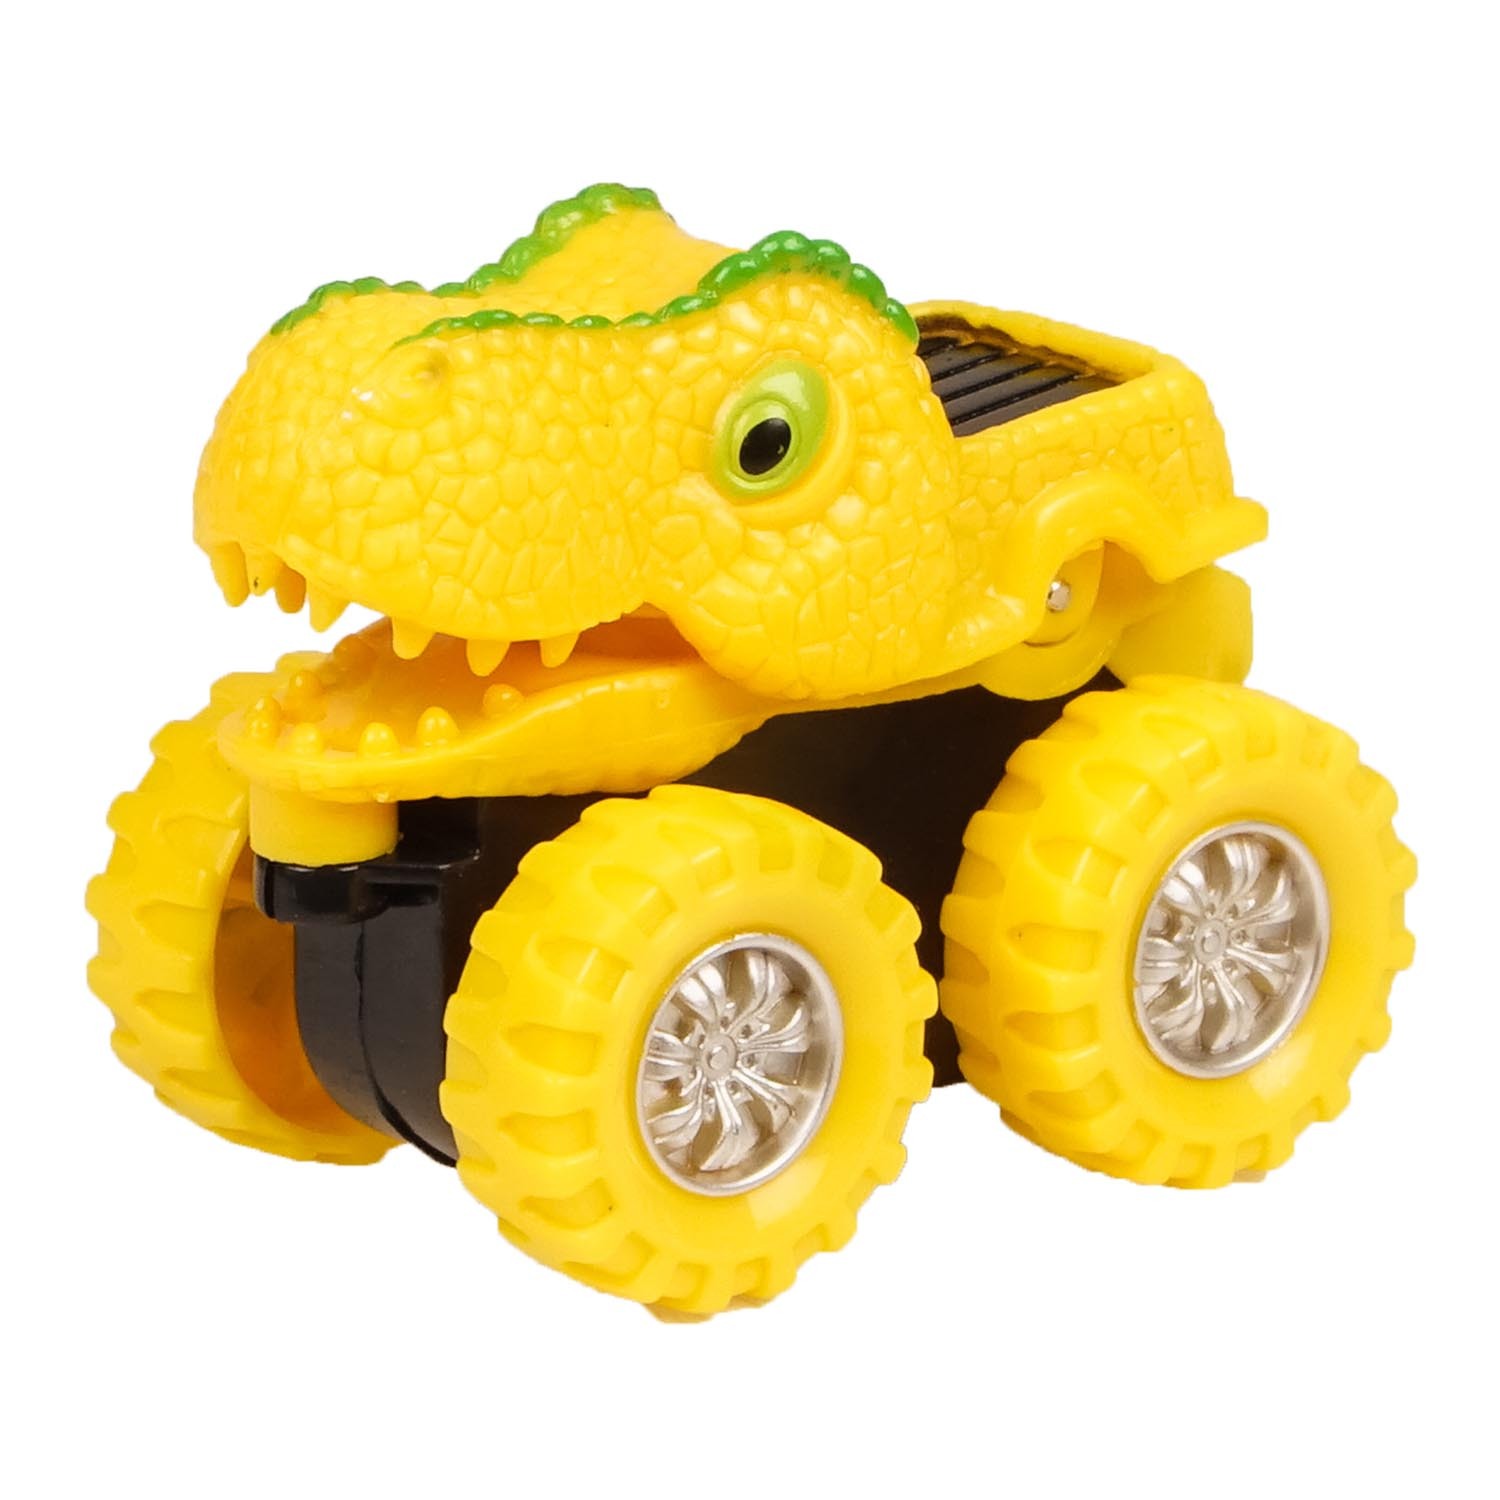 Tracksterz Multi Coloured Monster Trucks Toy 5 Pack Image 4